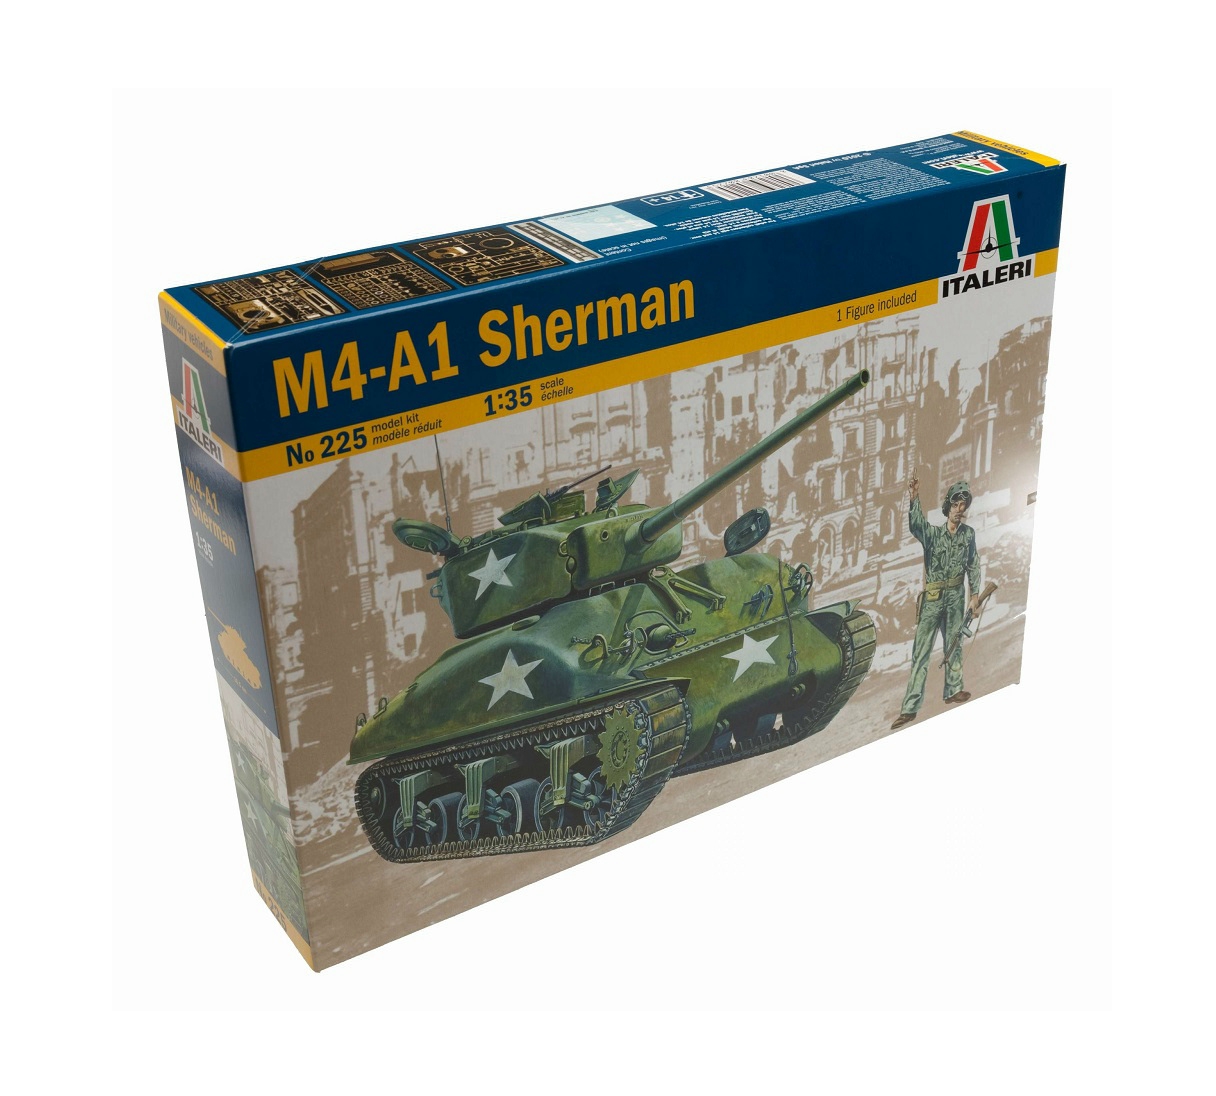 Italeri M4-A1 Sherman 1:35 (225)